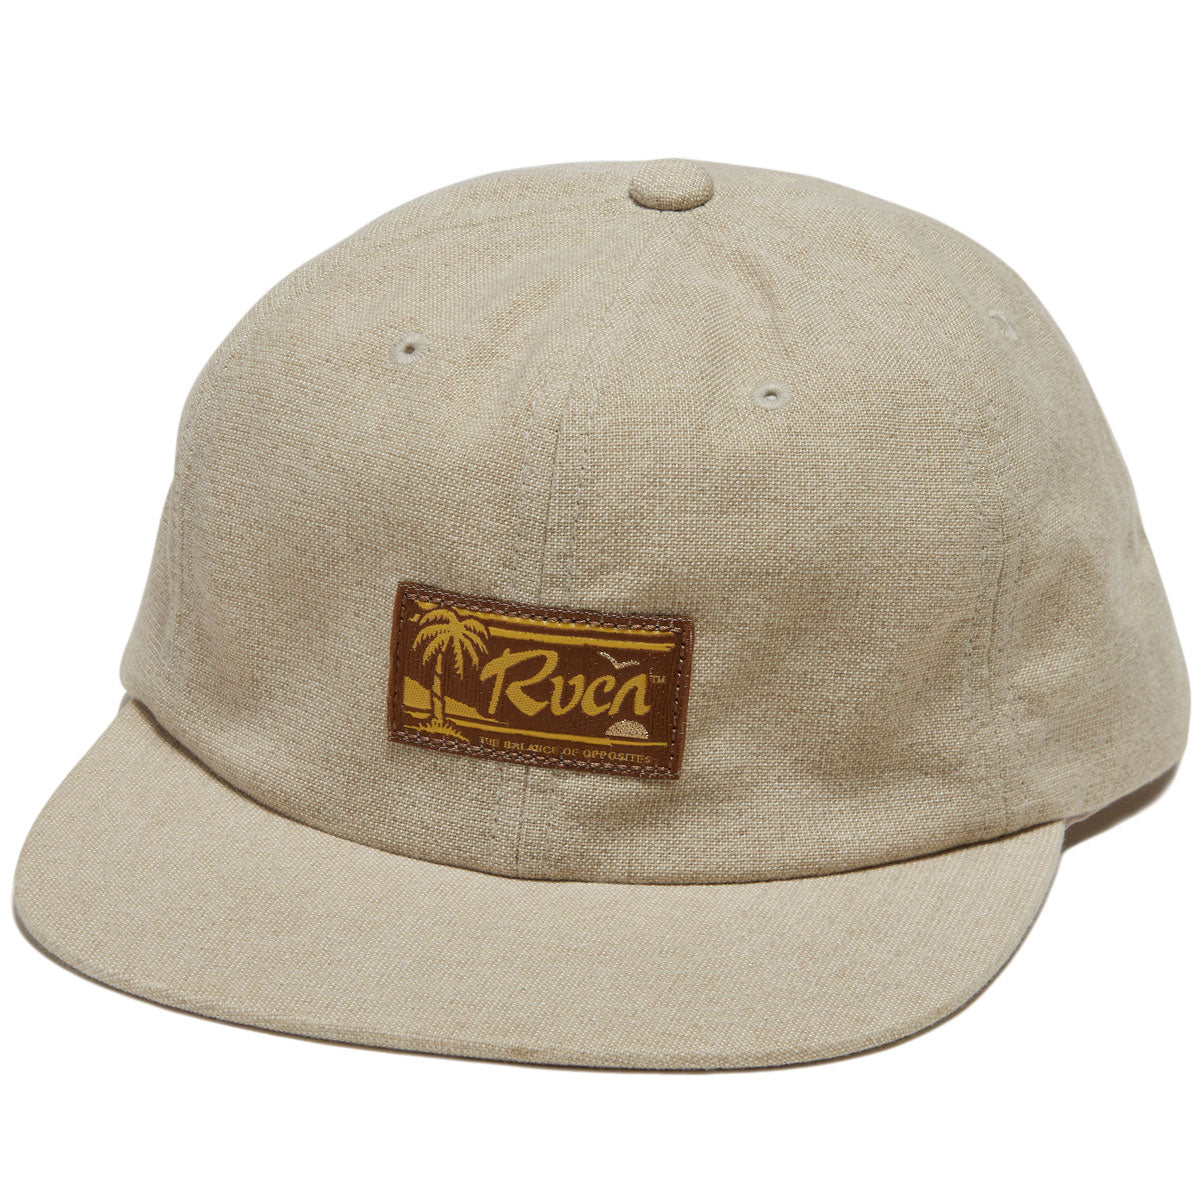 RVCA Exotica Snapback Hat - Latte image 1